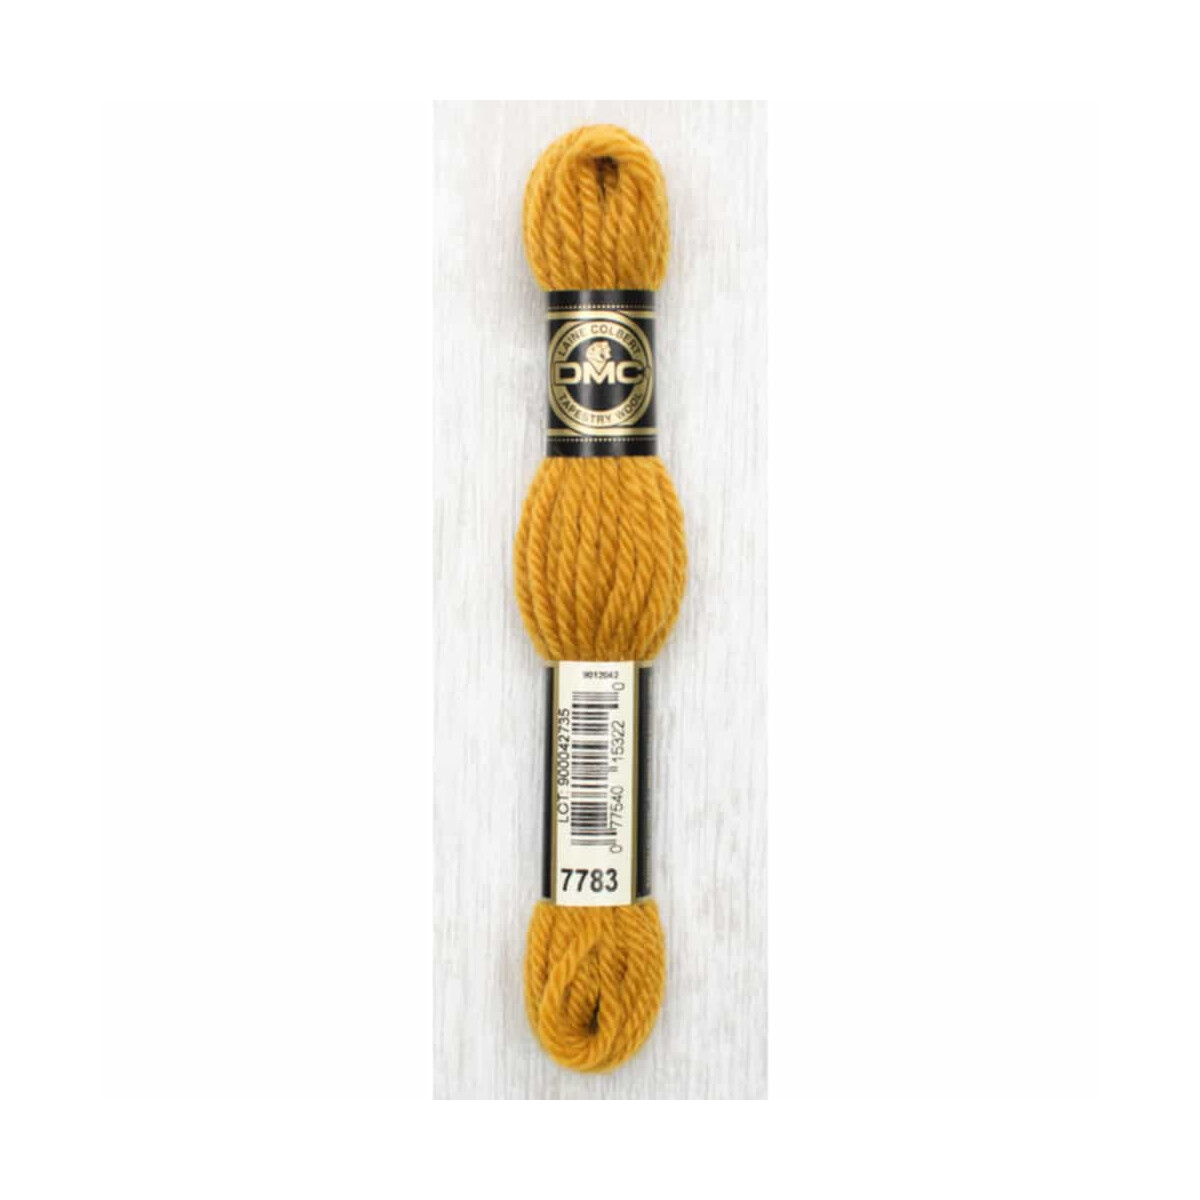 DMC Laine Colbert wool, 8m, 486-7783